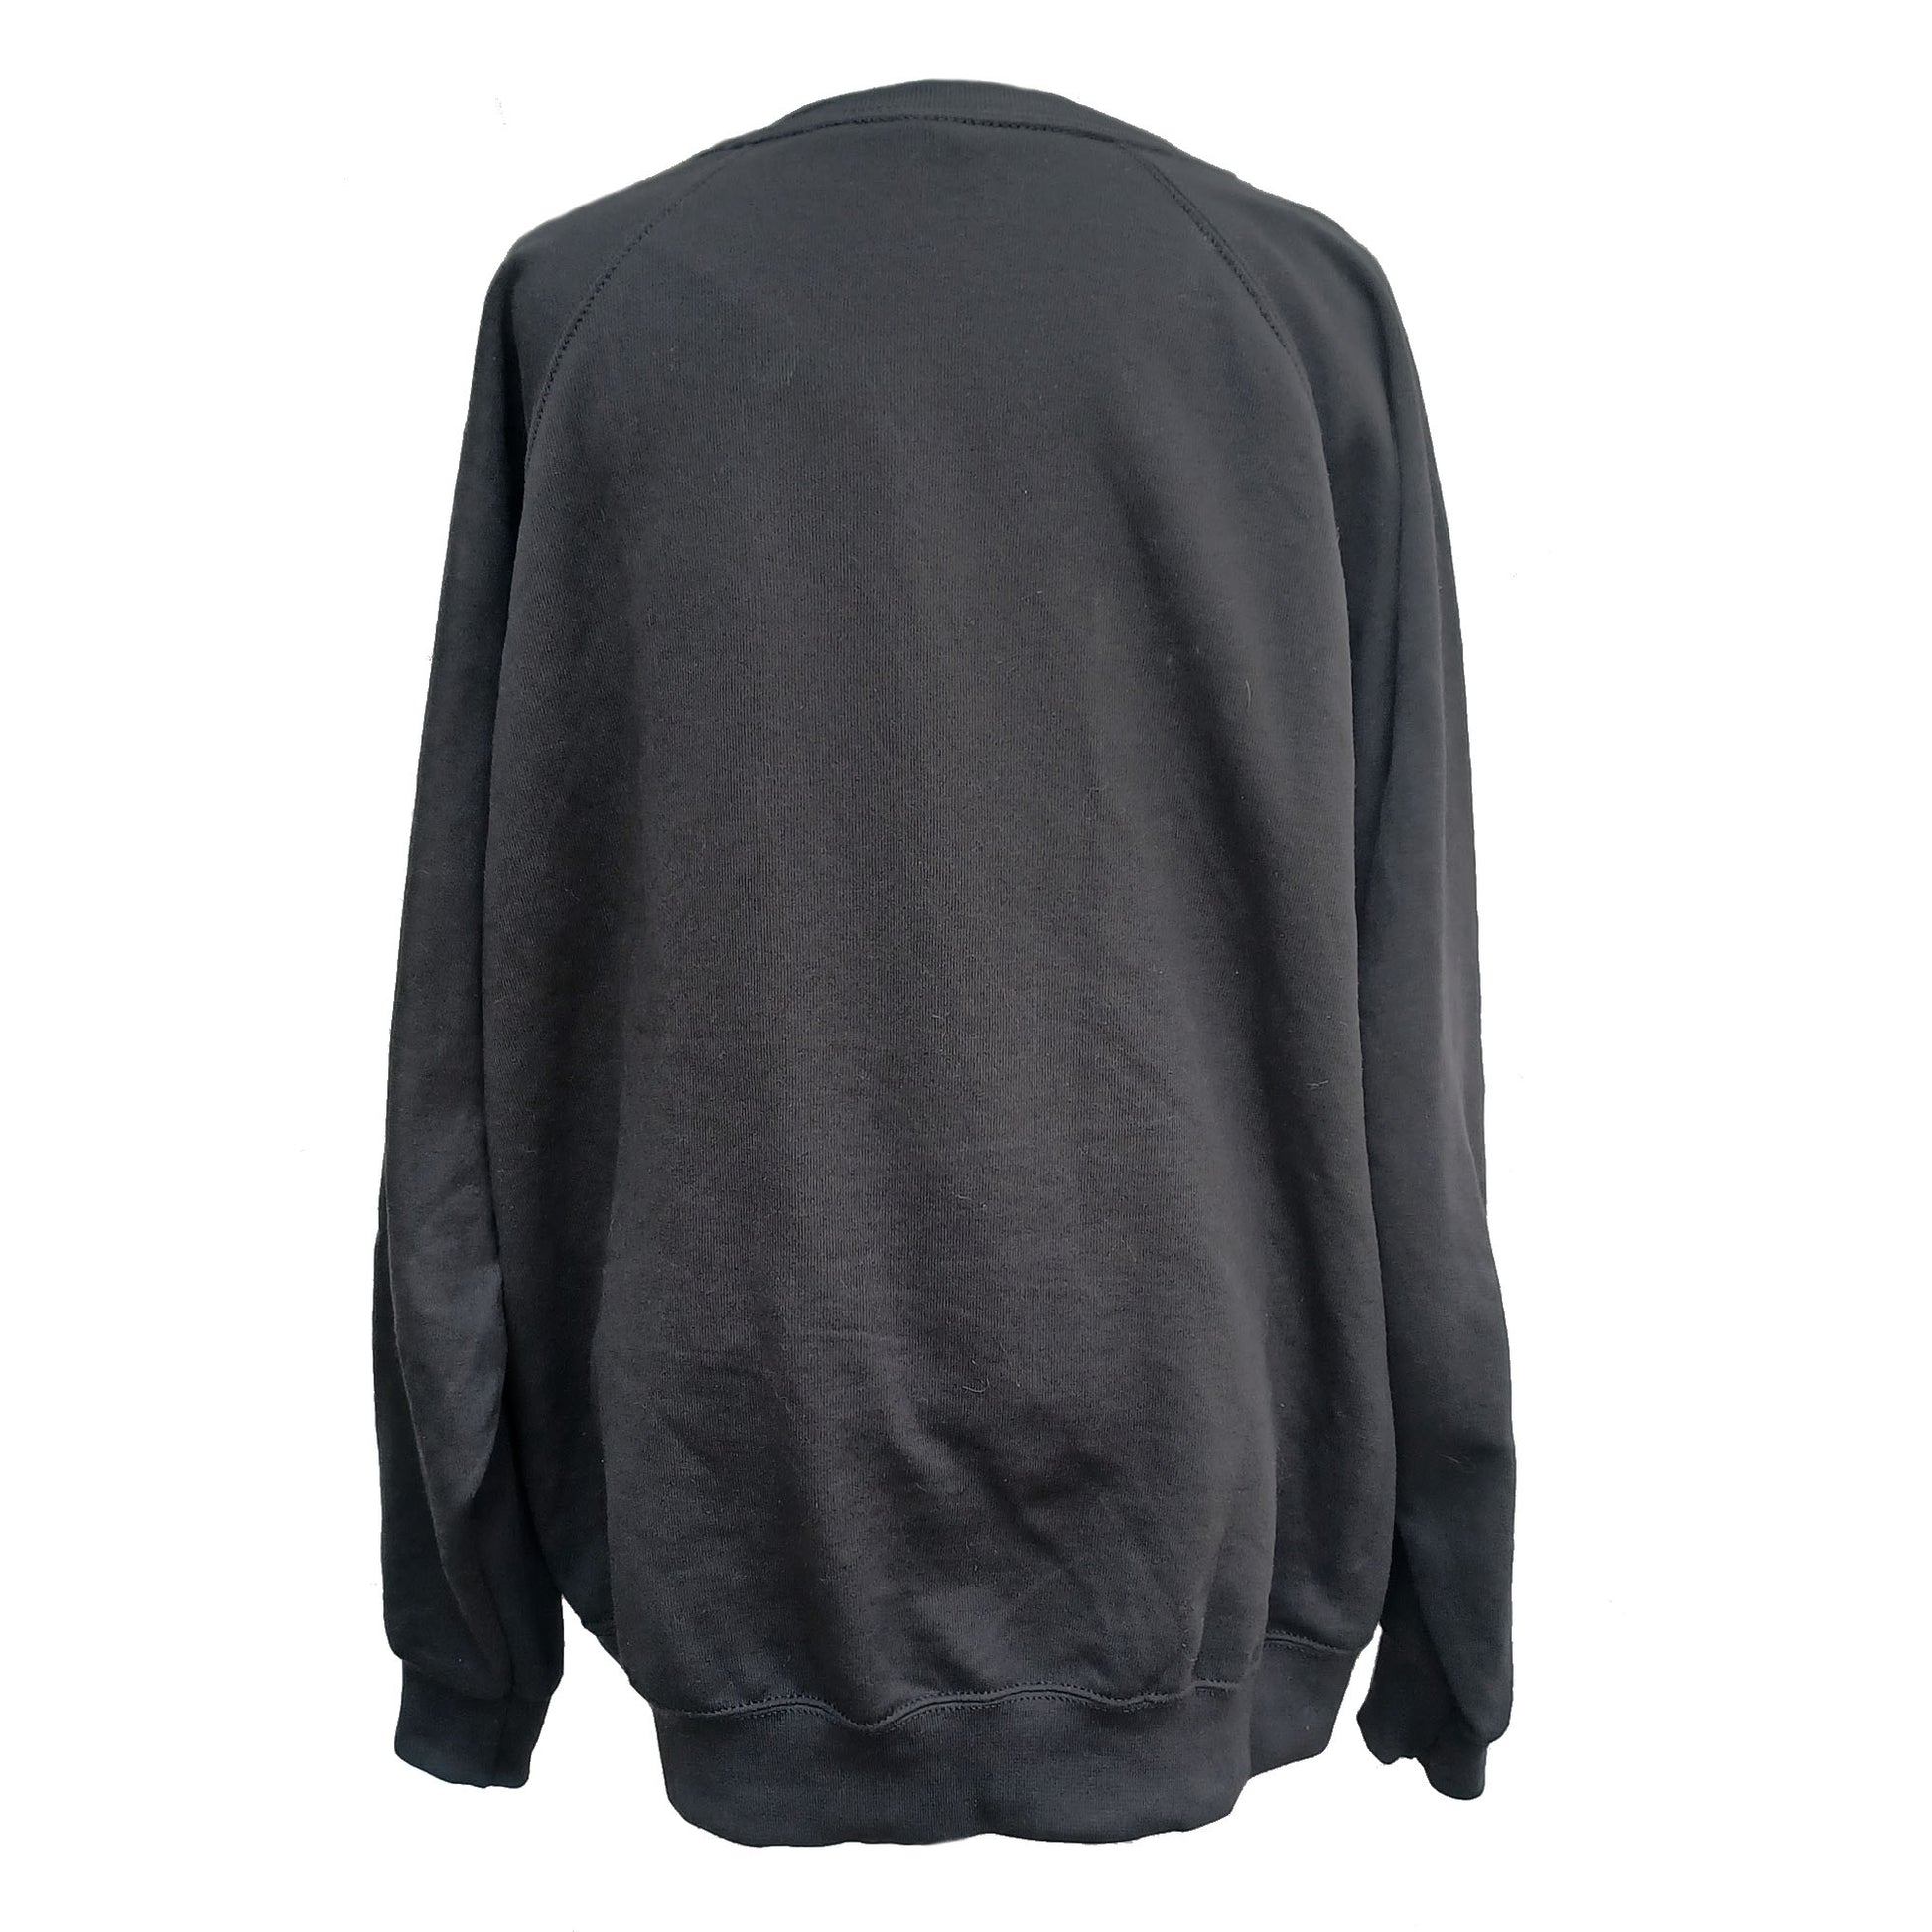 Black raglan sleeve sweatshirt. Latex print